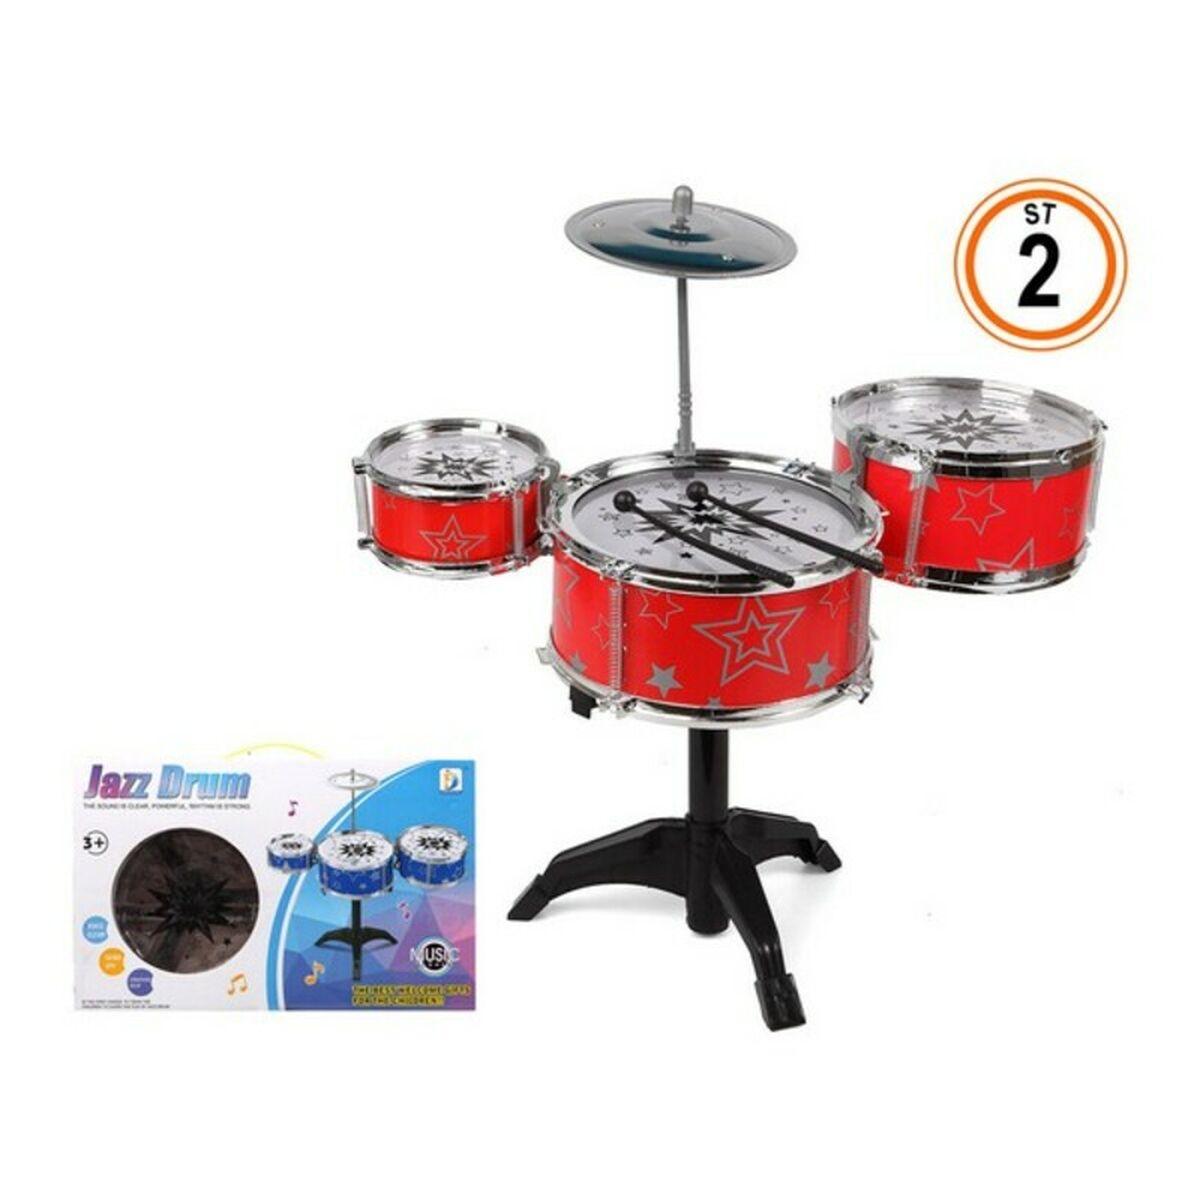 Electronique Musical drum set Jazz Drum S1123683 41 x 26 cm